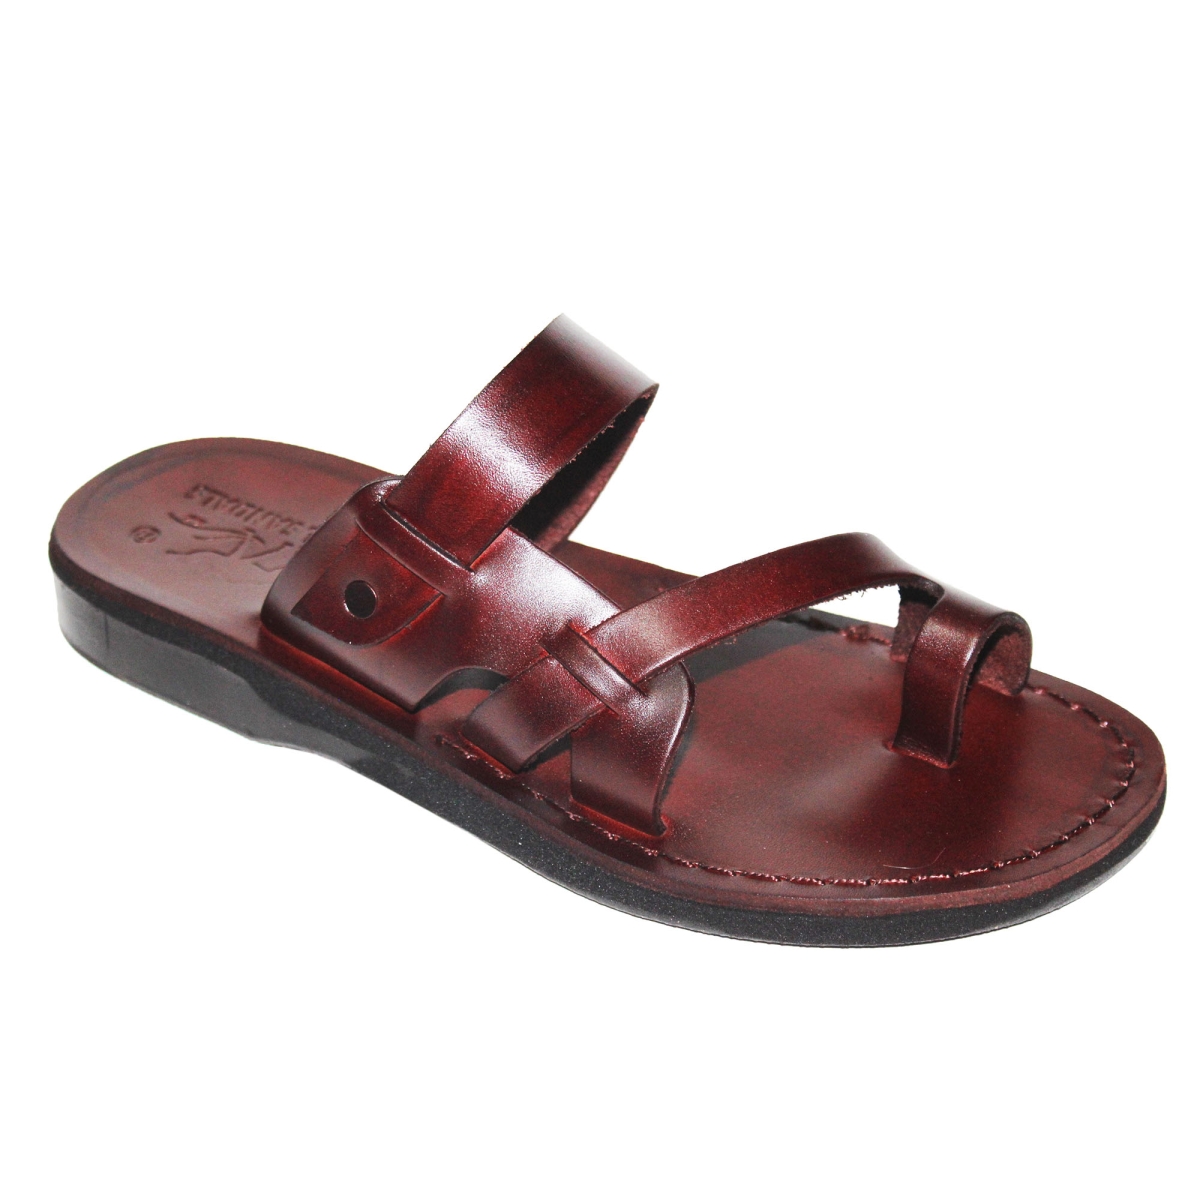 Samuel Handmade Leather Sandals - 2